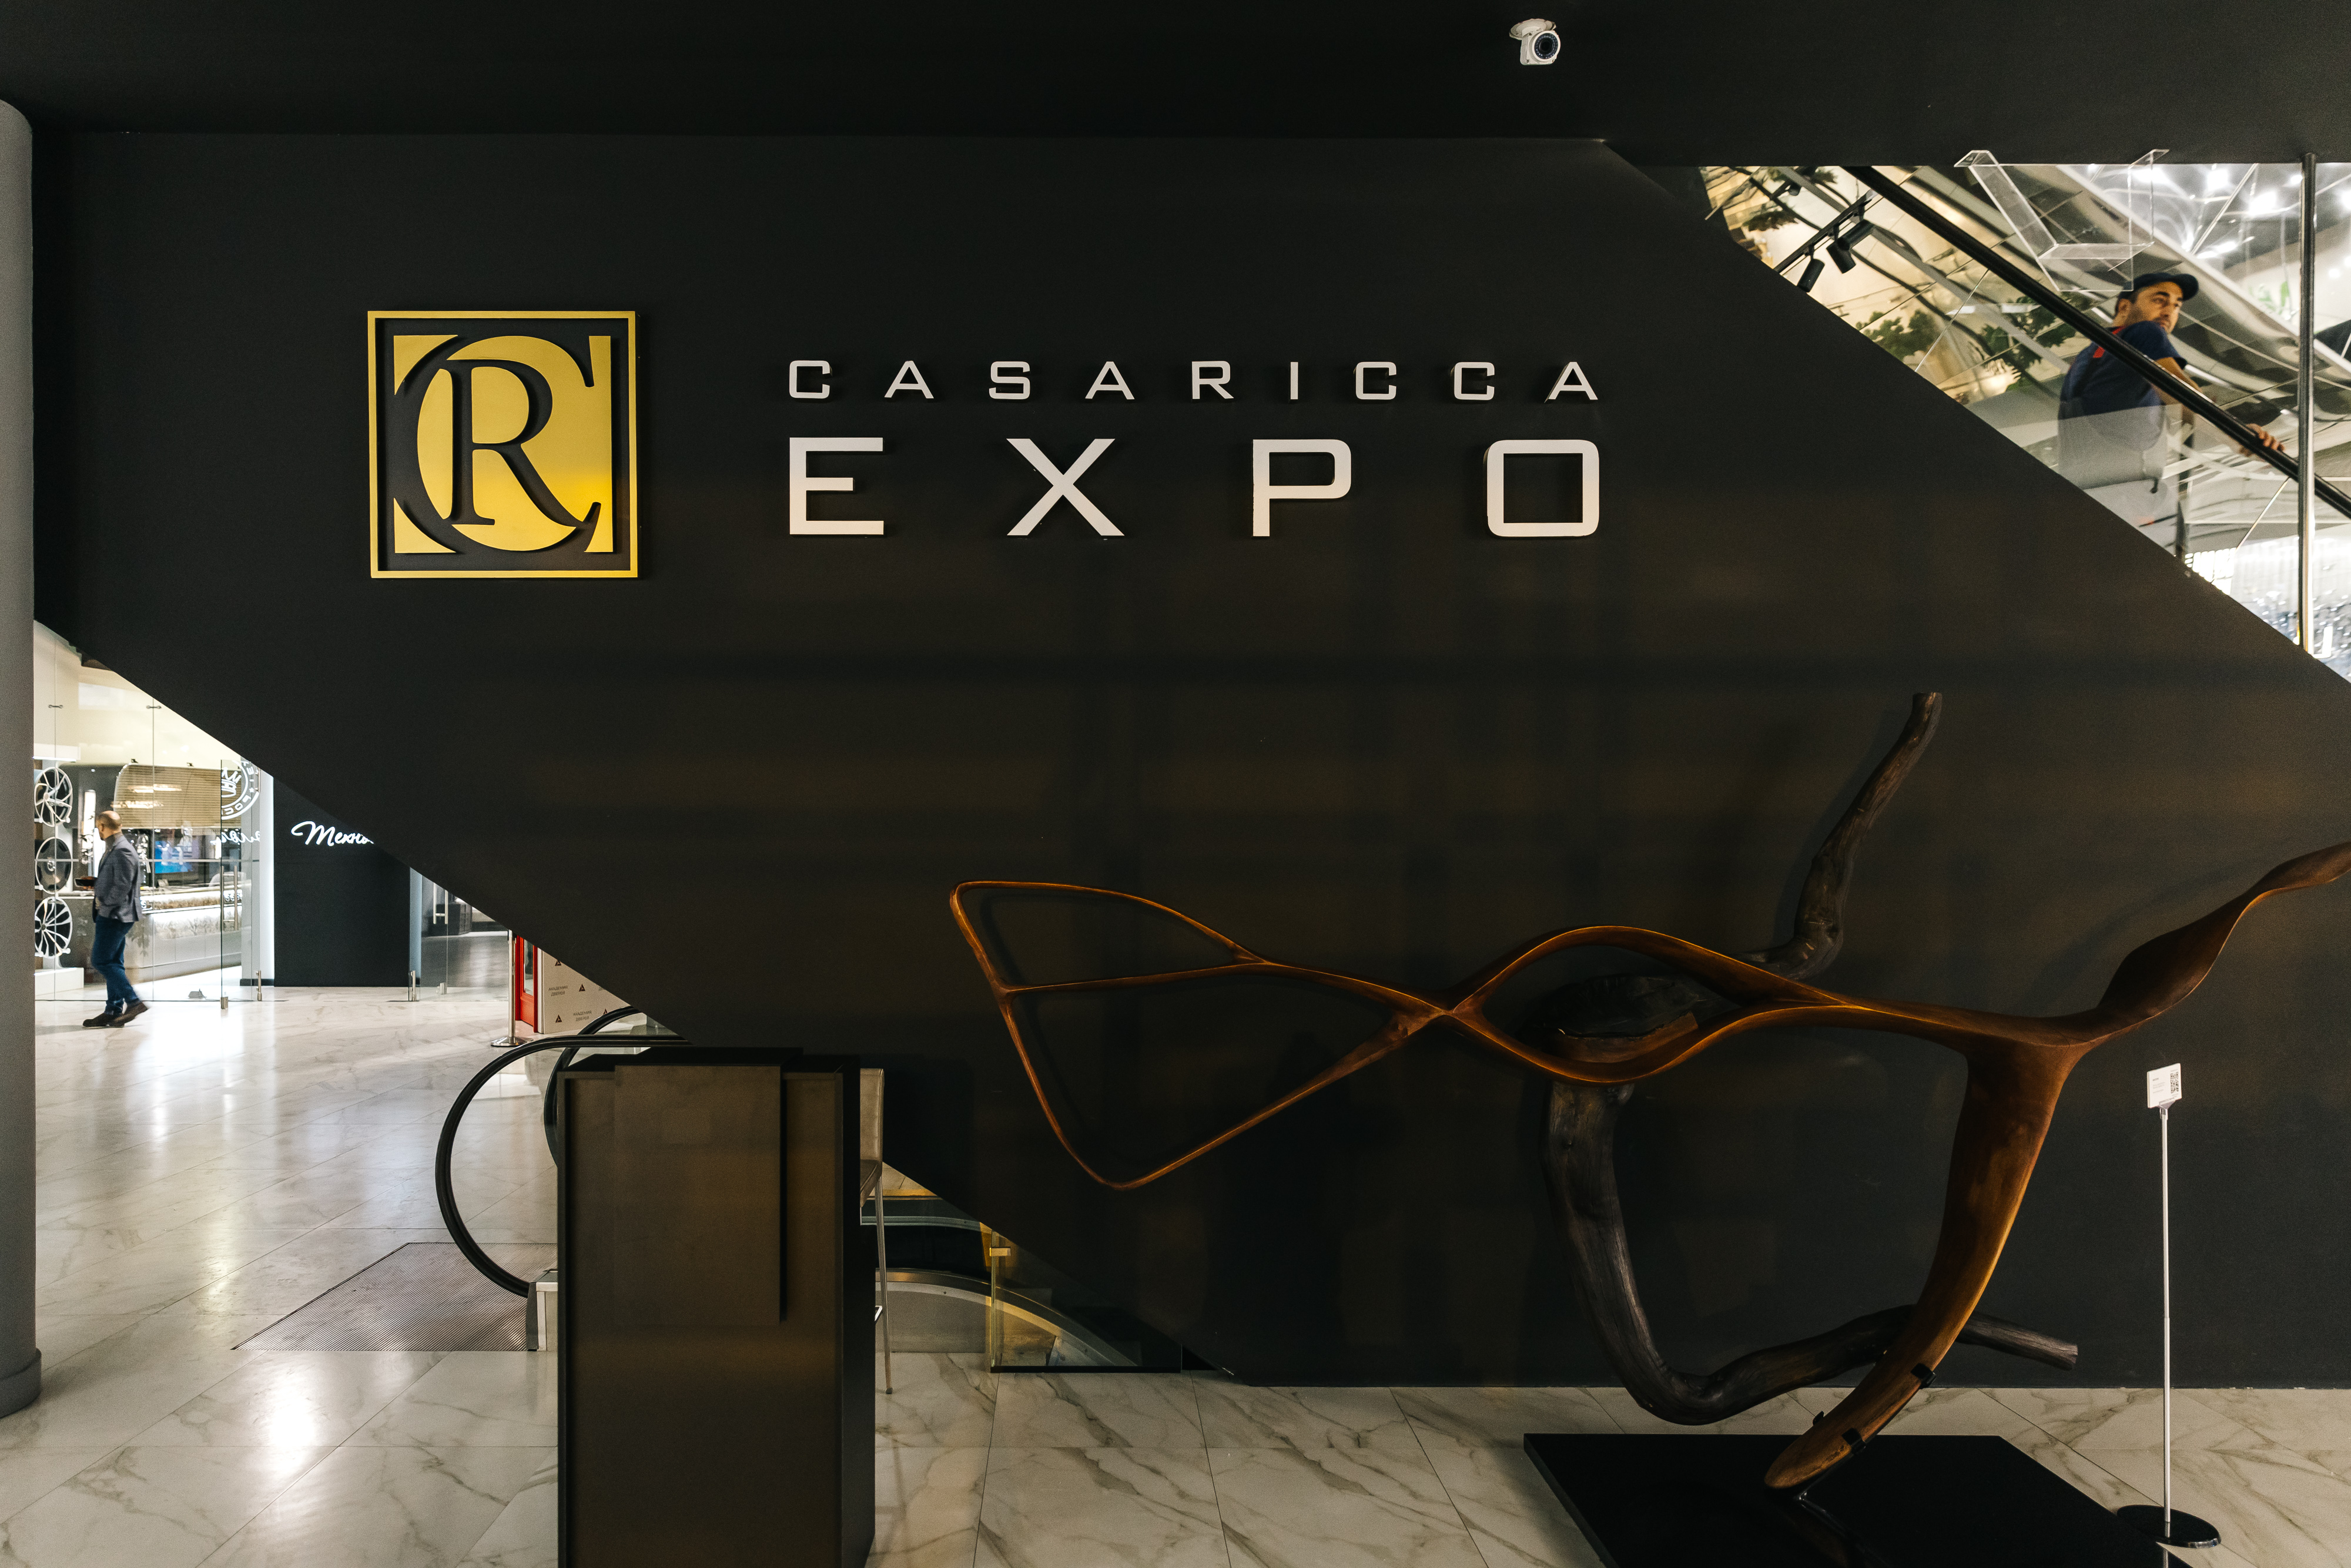 Casa Ricca Expo официально открылся!